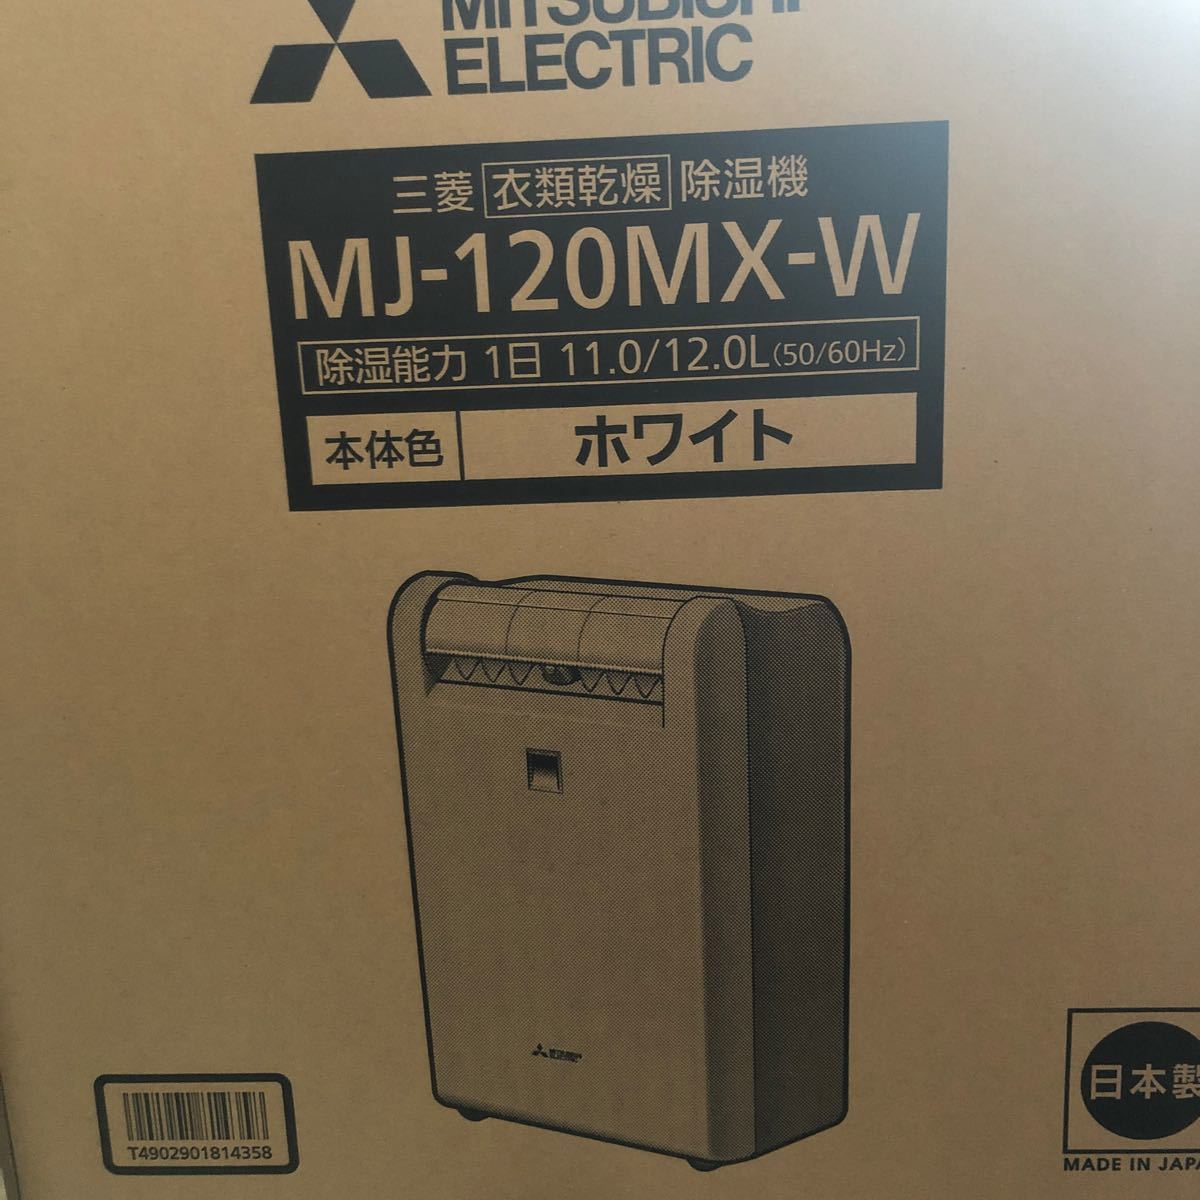 MITSUBISHI 三菱 衣類乾燥除湿機 MJ-120MX-W virtualofficesnyc.com